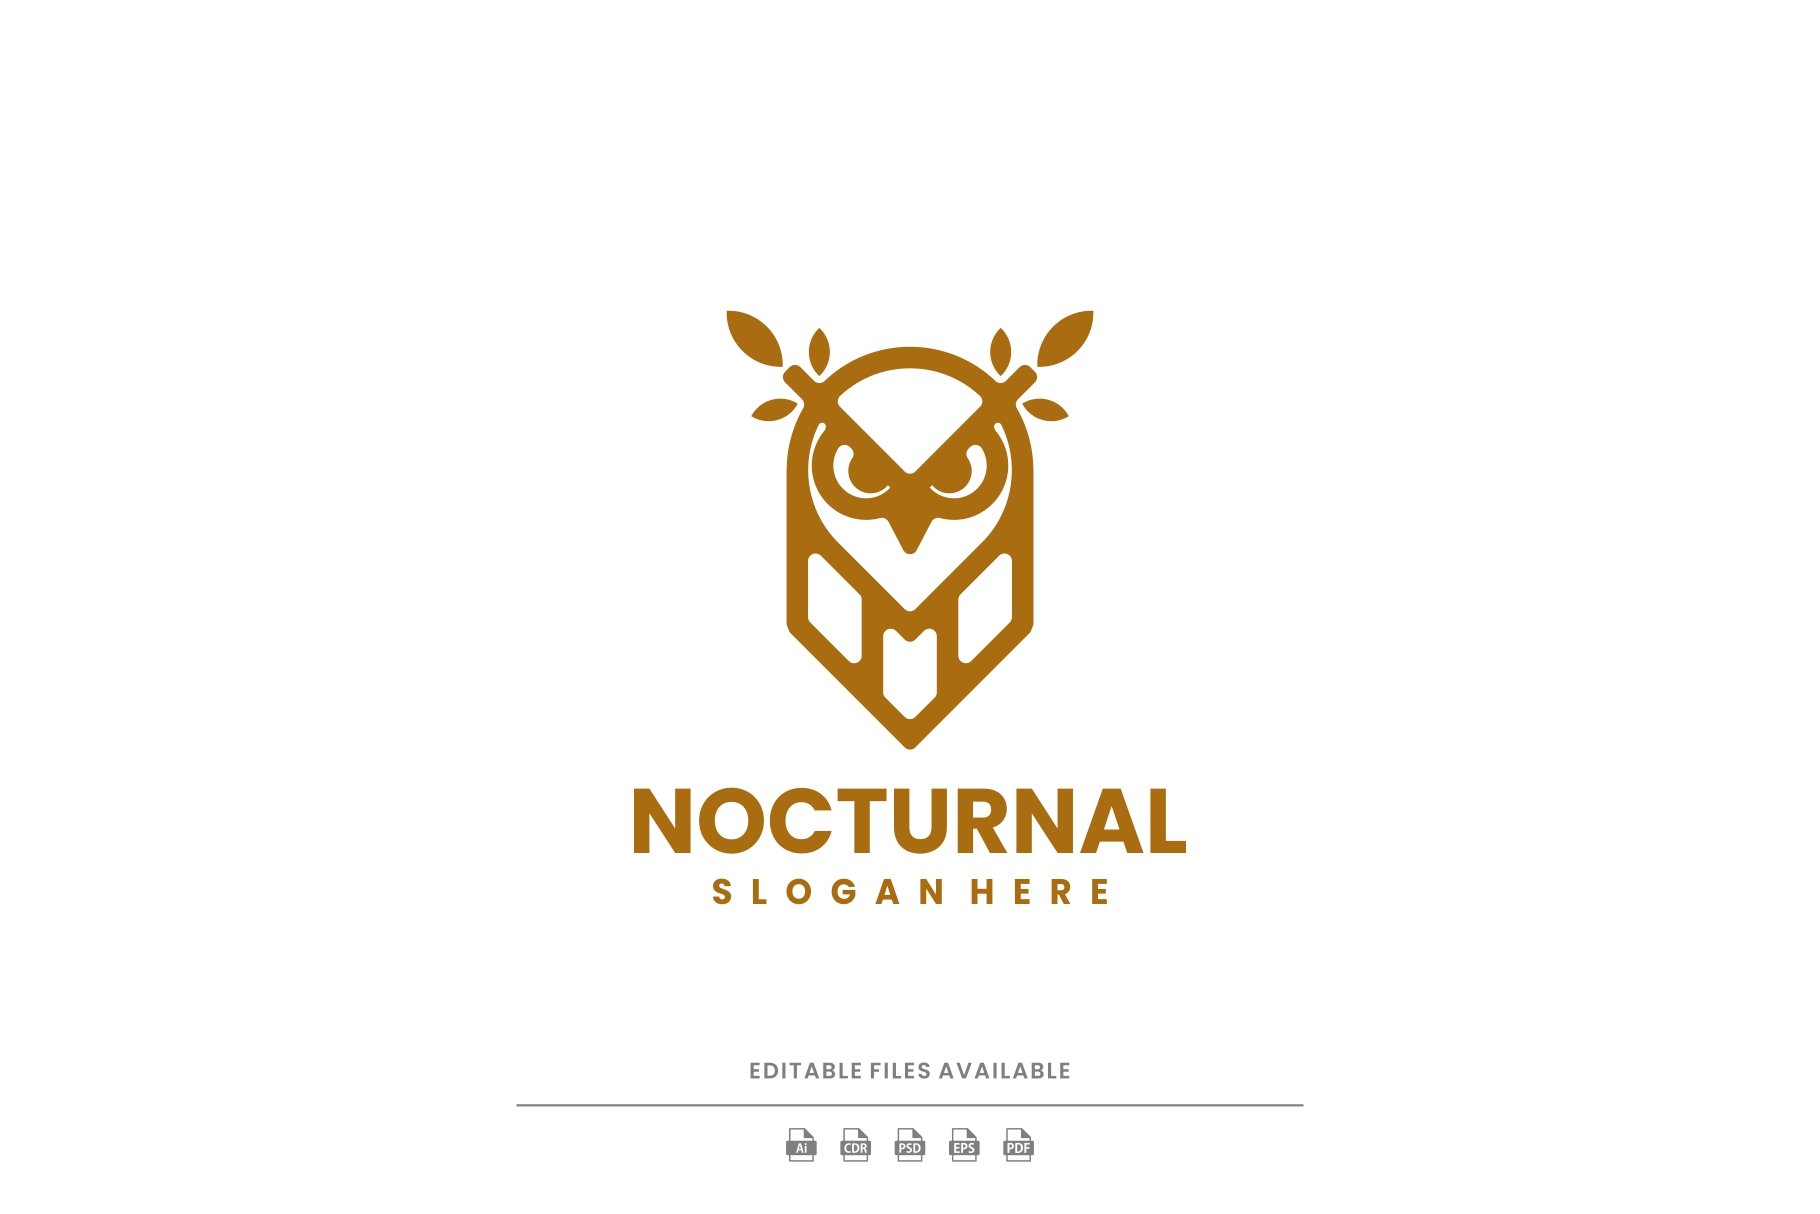 Nocturnal Line Art Logo cover image.